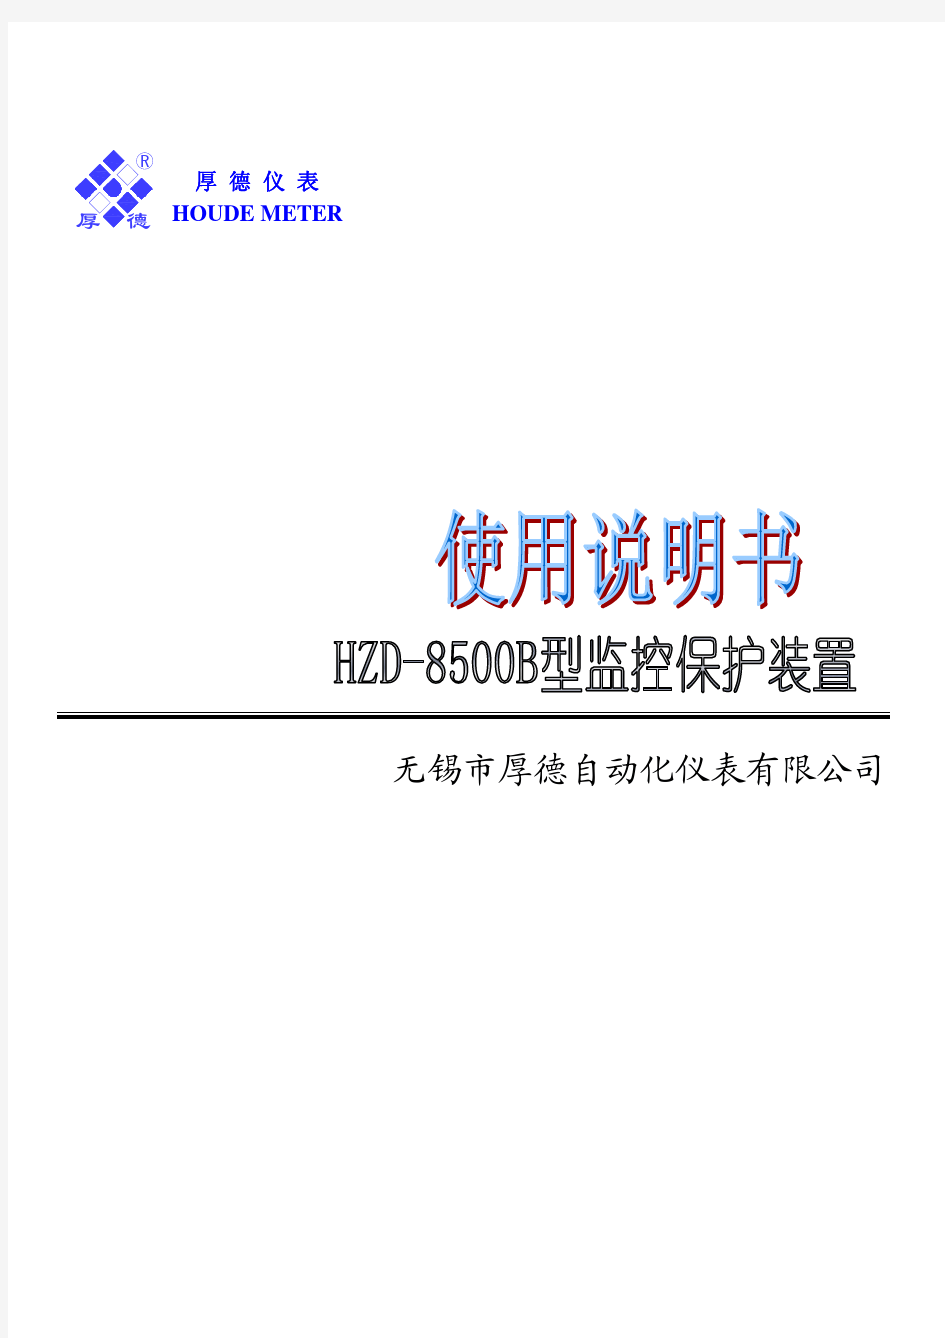 HZD-8500B综合